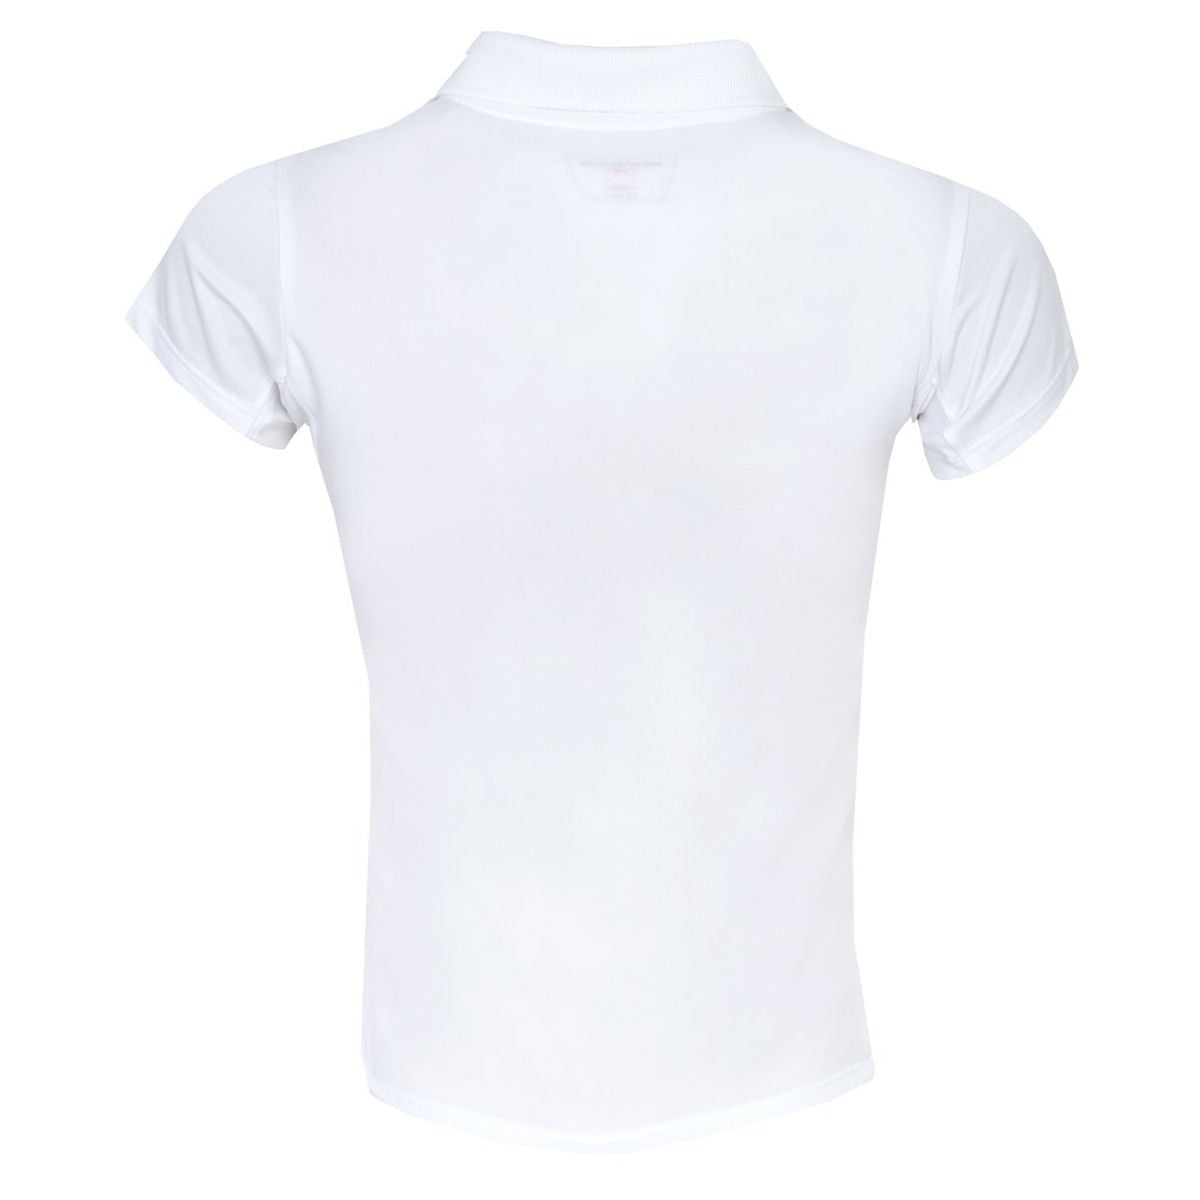 White Boys Polo Shirt The 'Hoylake'